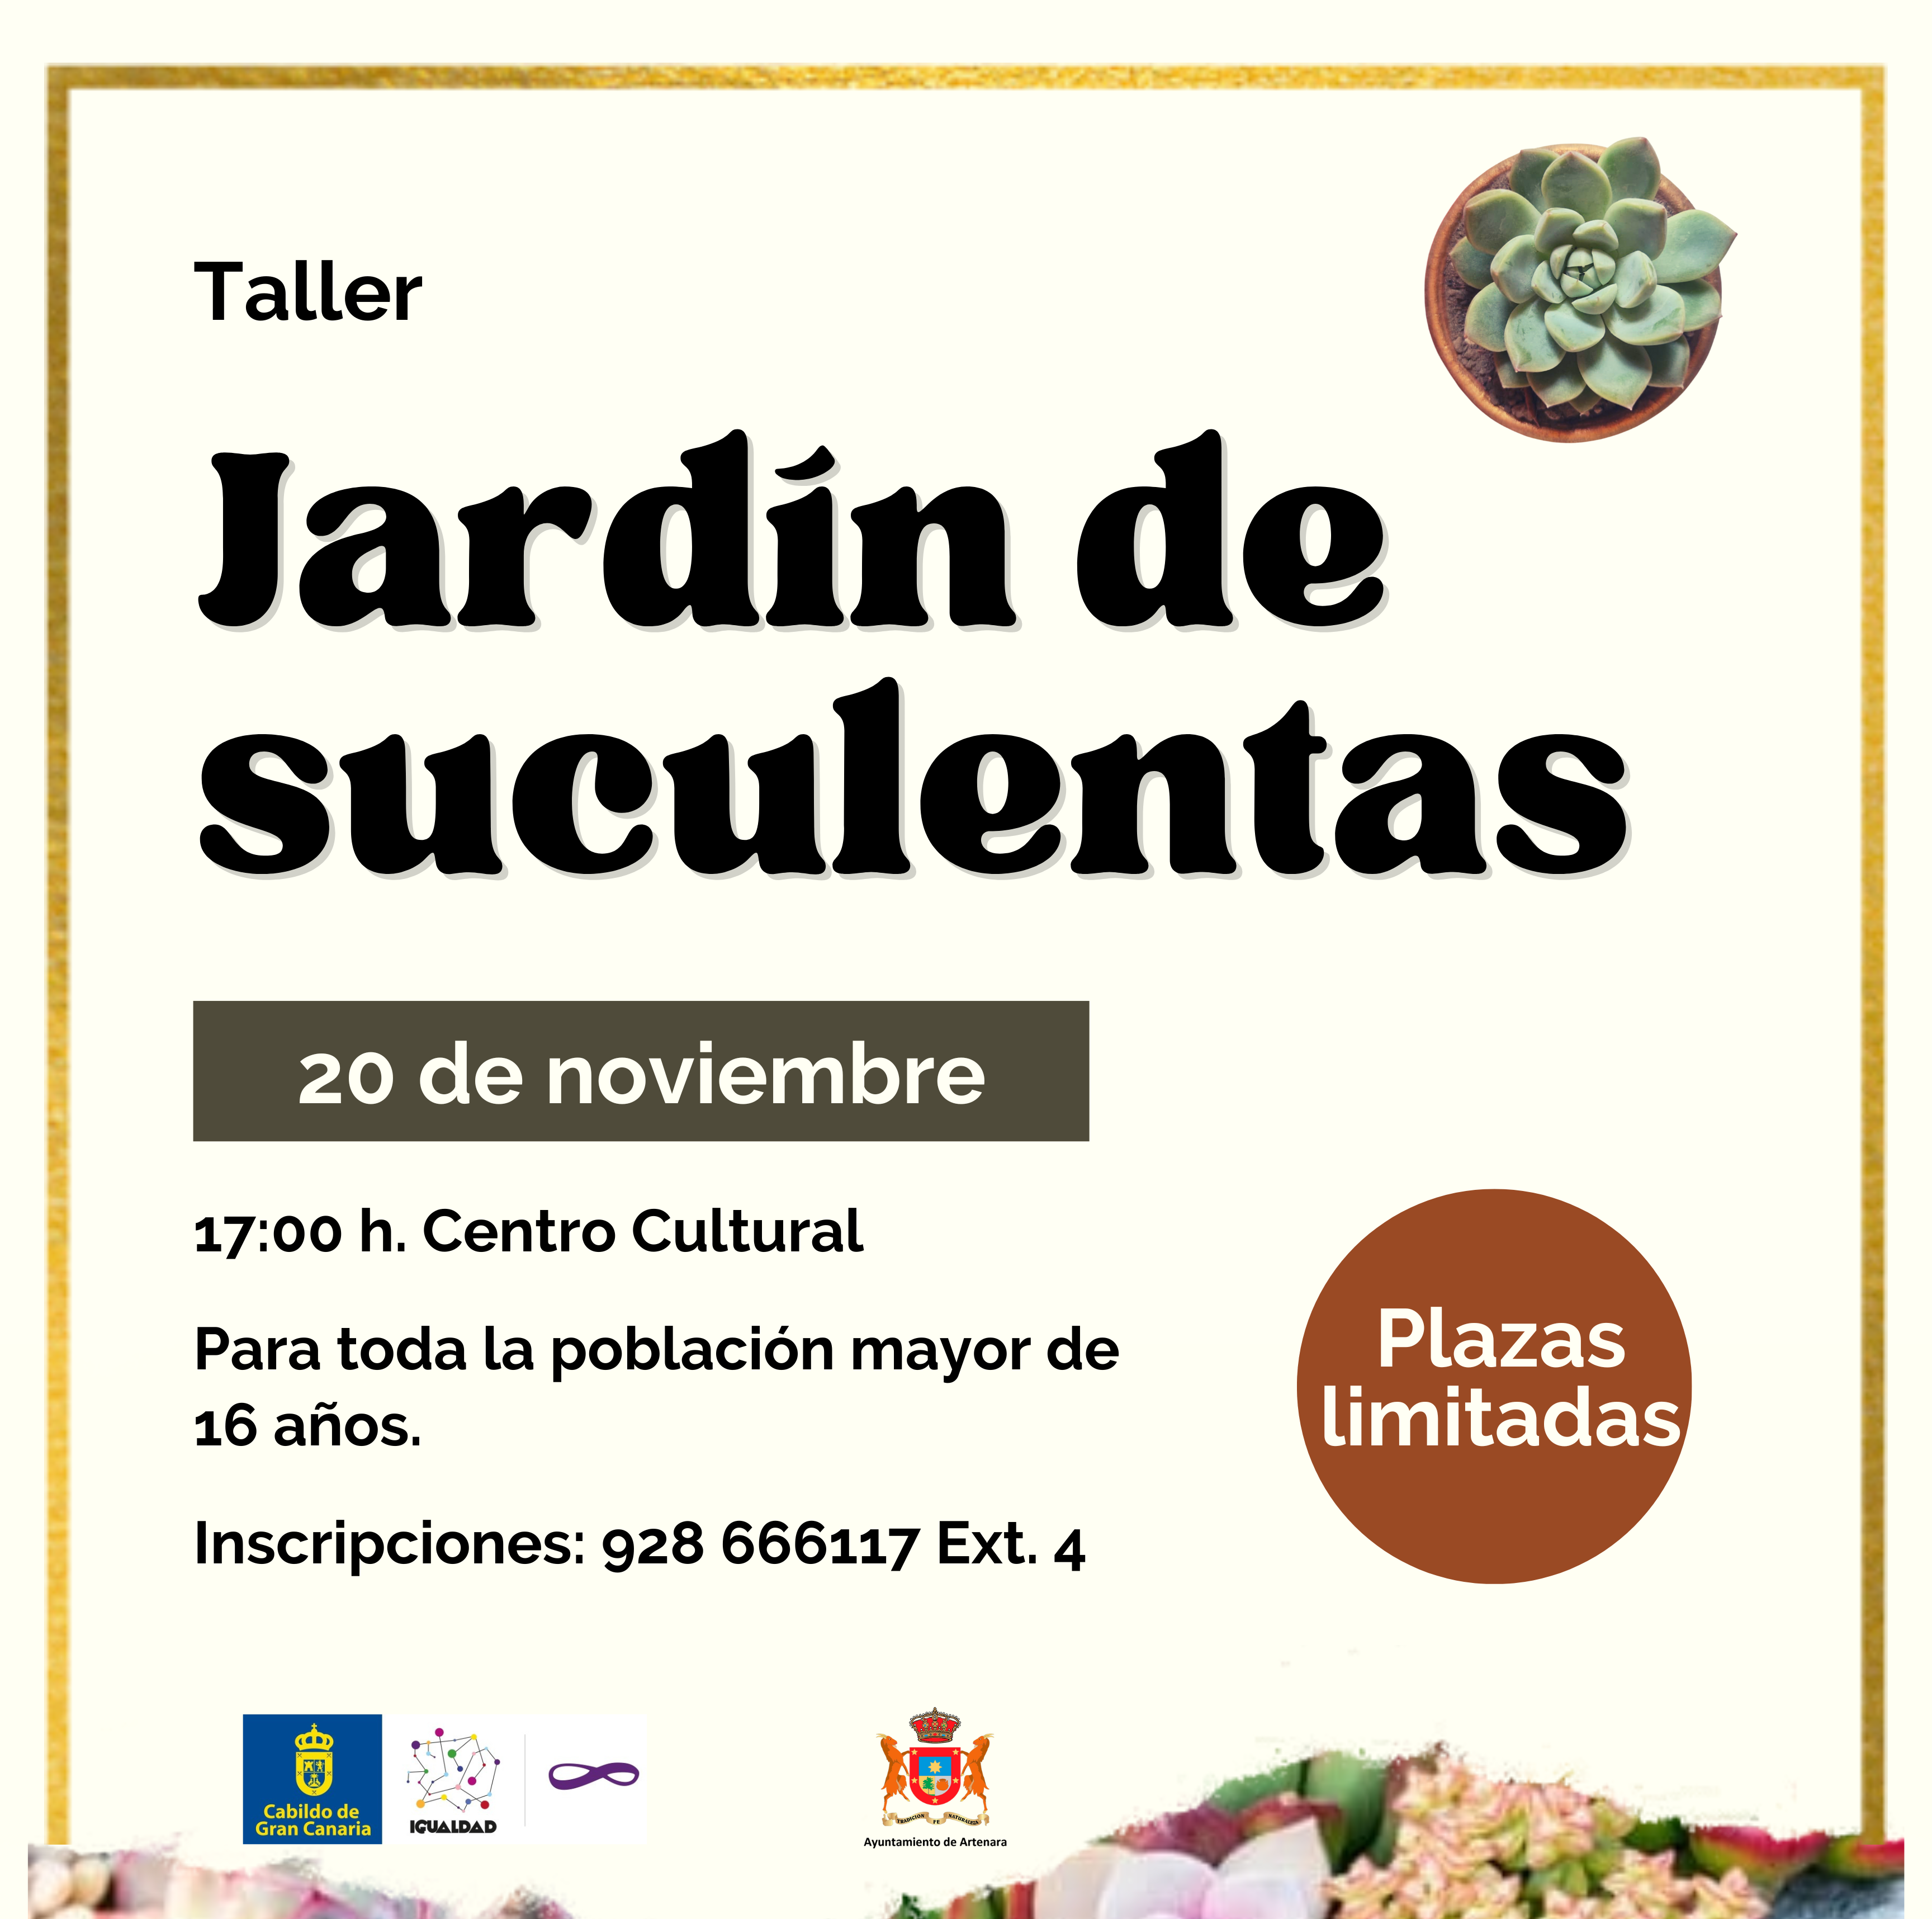 Taller "Jardín de Suculentas".